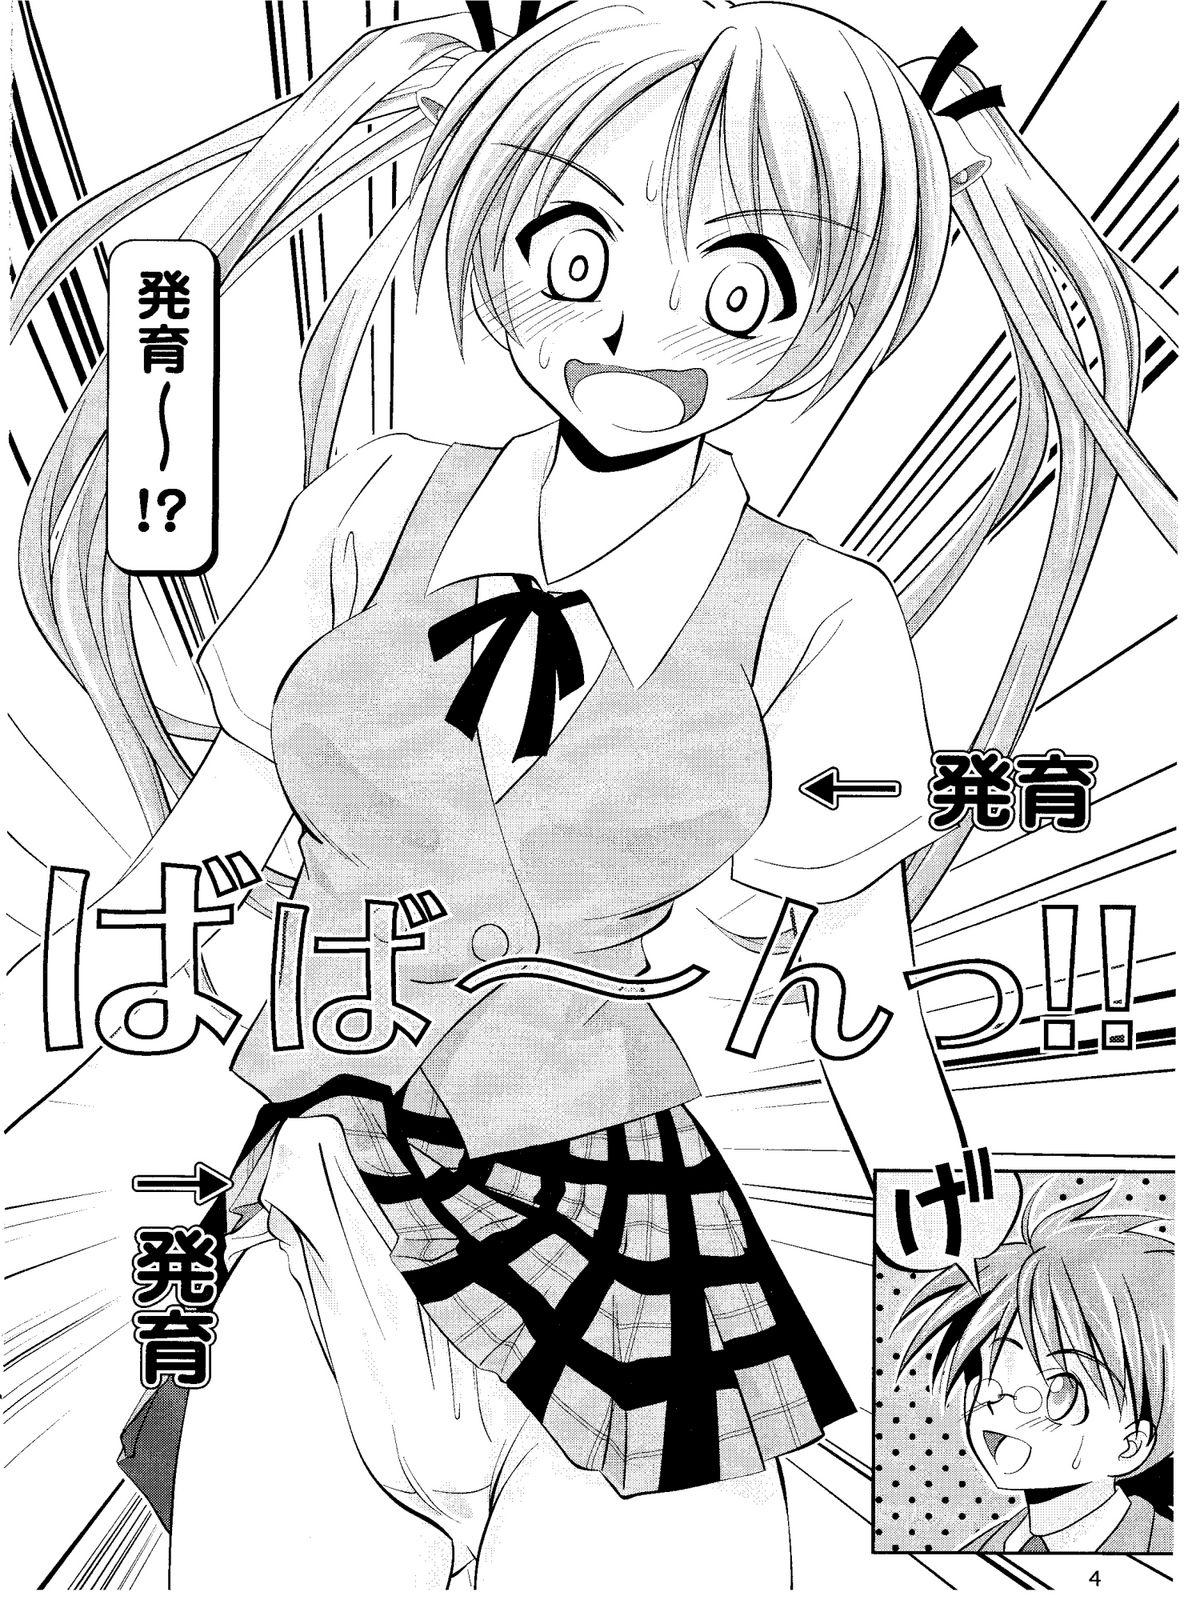 Strip Negima - Not Harry Potter - Mahou sensei negima Publico - Page 4